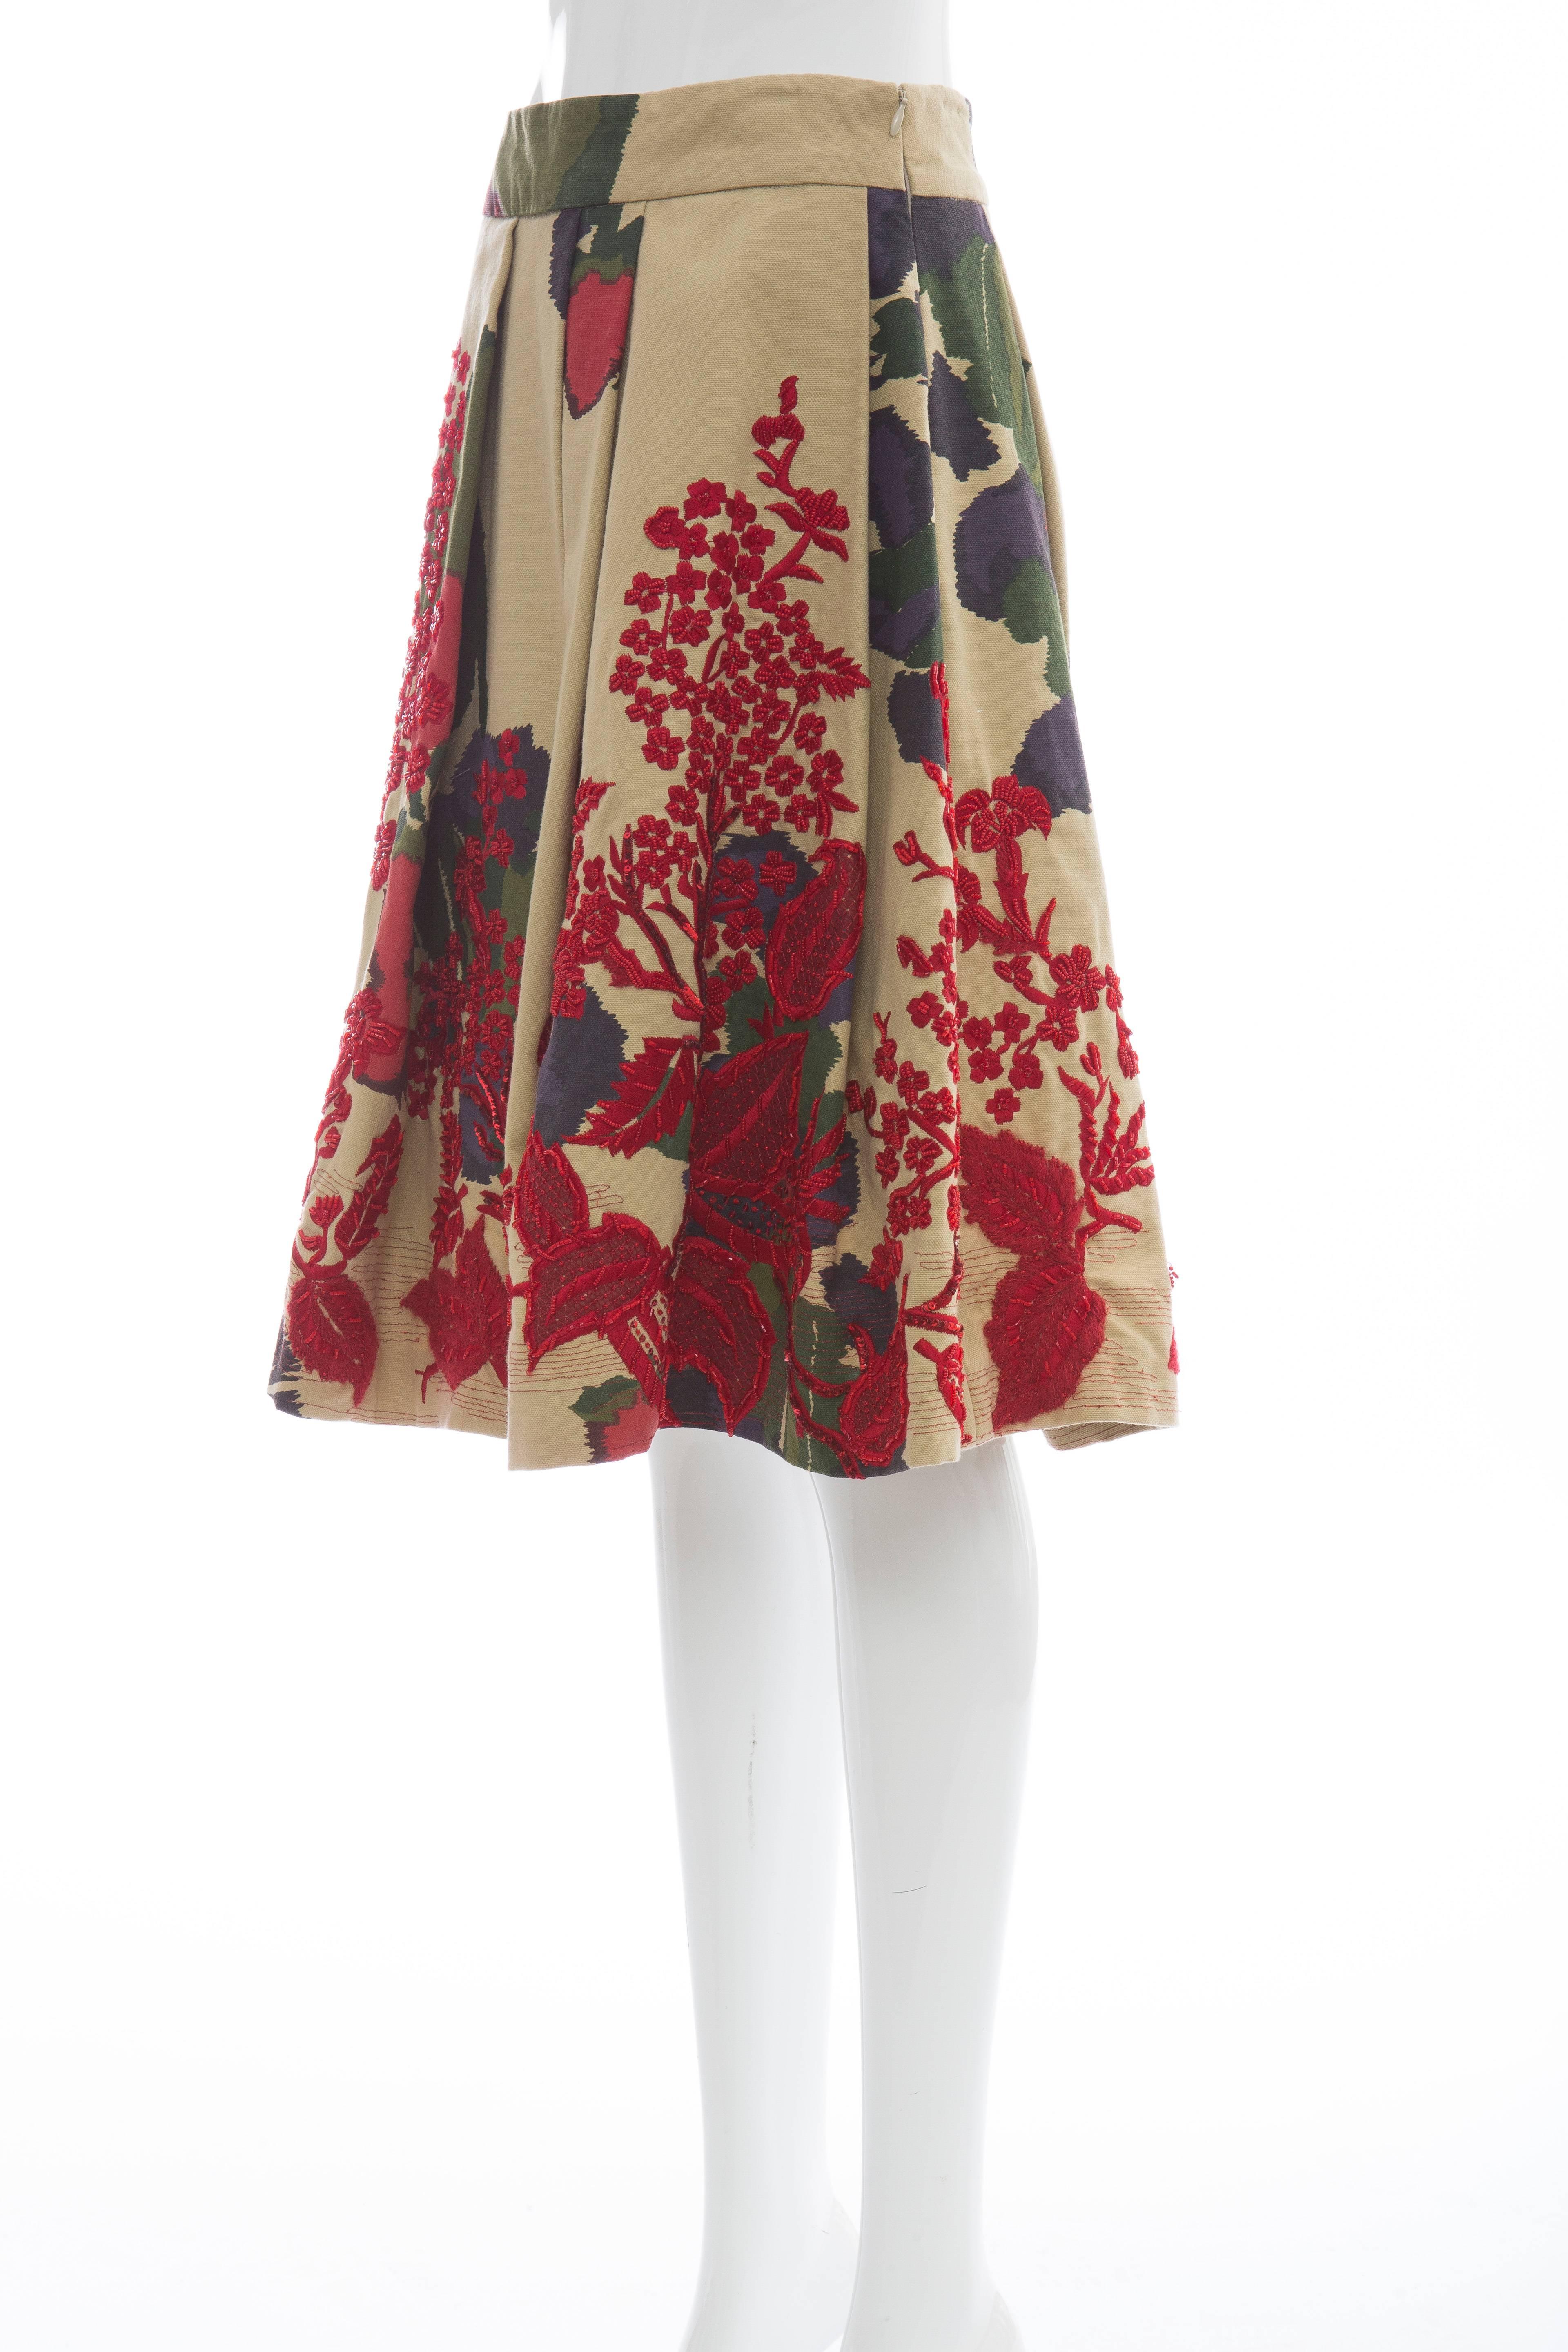 Dries Van Noten Runway Cotton Beaded Sequin Embroidered Skirt, Fall 2005 2